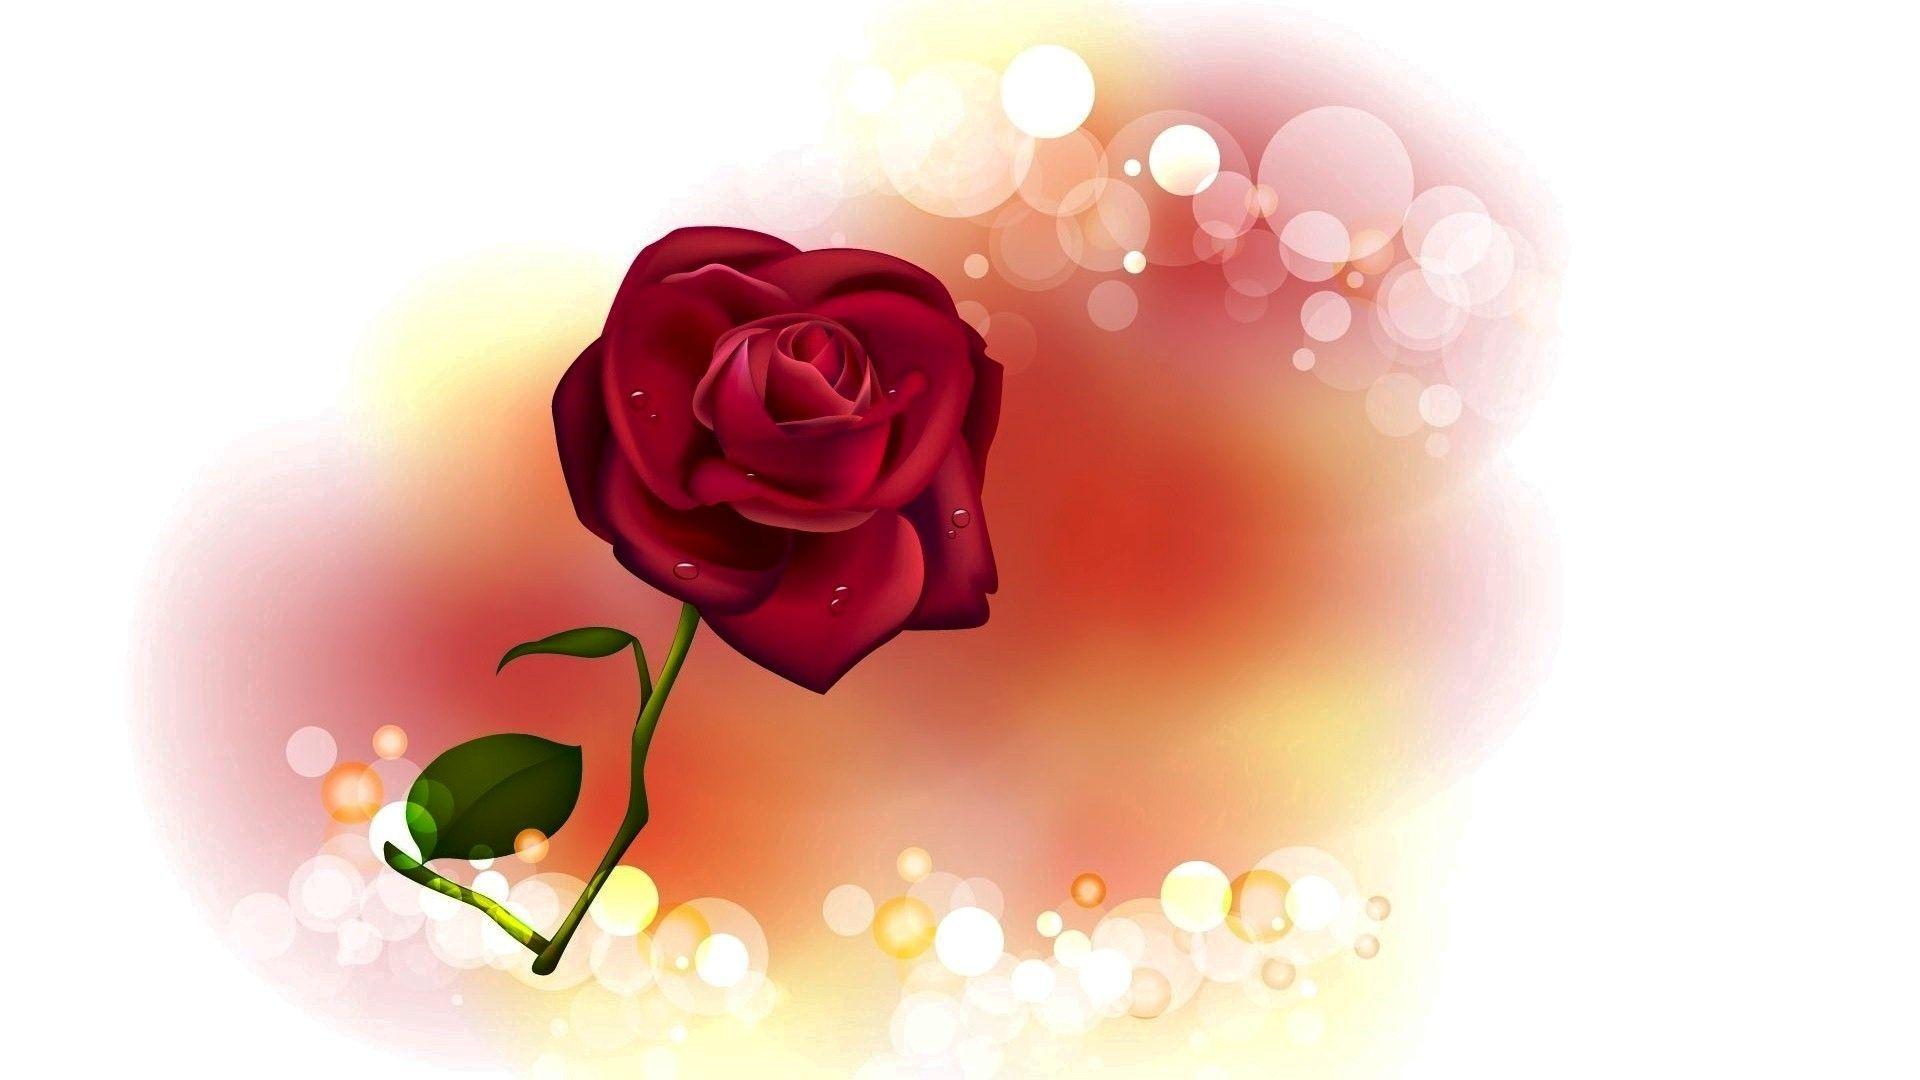 Red Rose on Valentine Day. Rose wallpaper, Flowers, Rose image